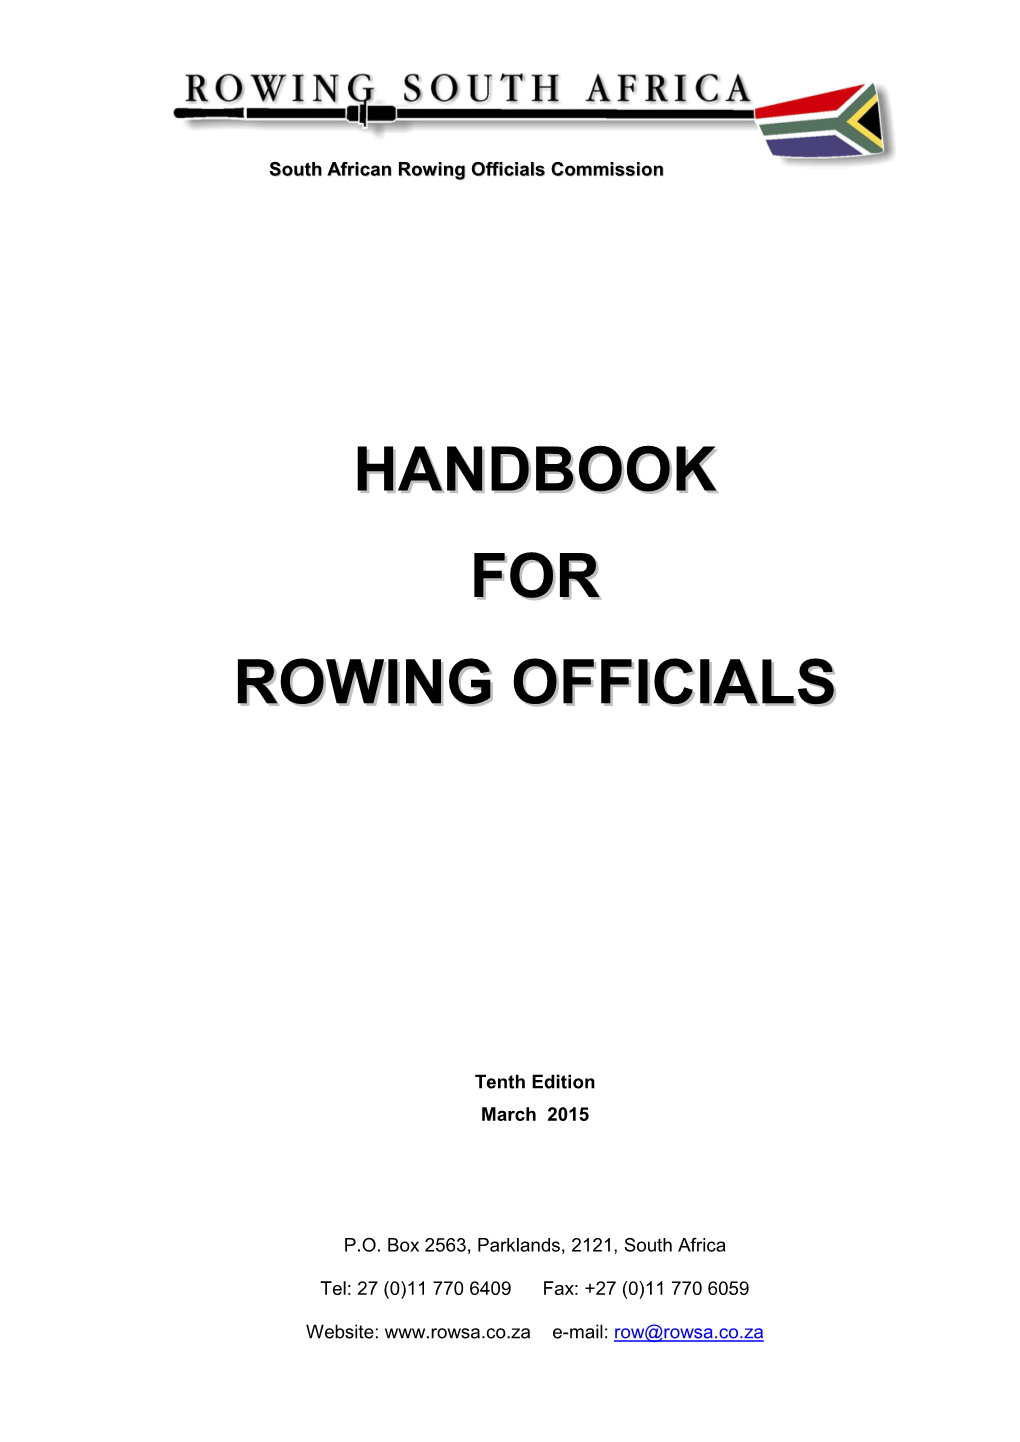 South African Rowing Officials Handbook